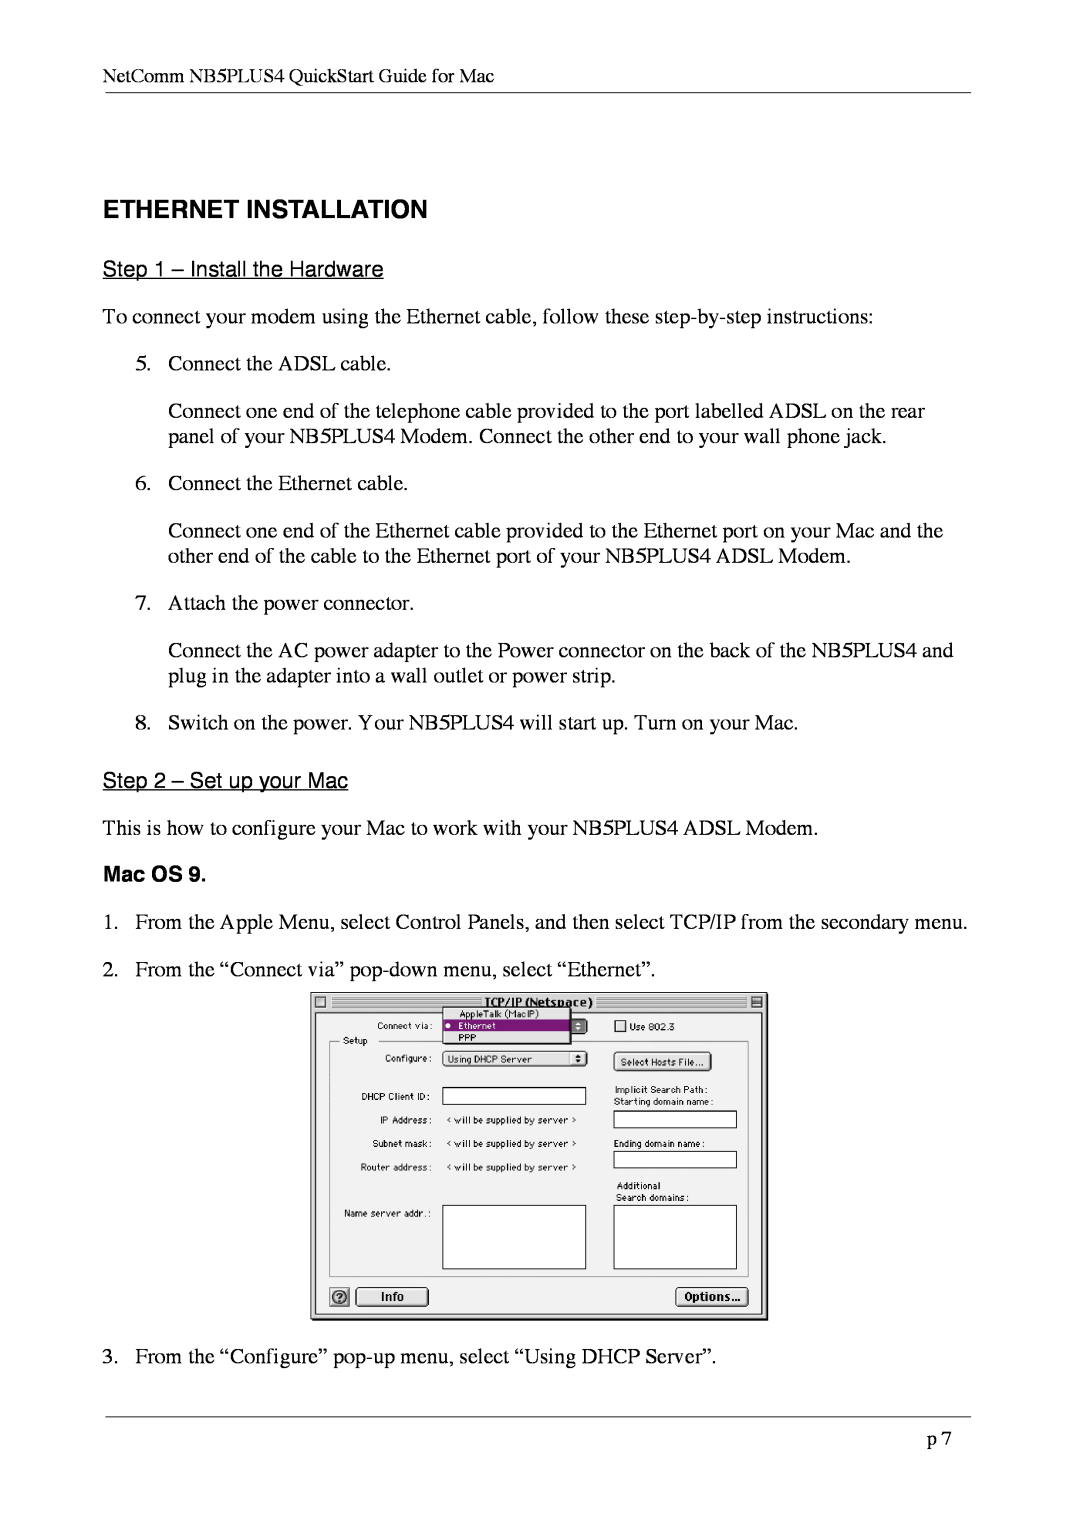 NetComm NB5Plus4 quick start Ethernet Installation, Mac OS 